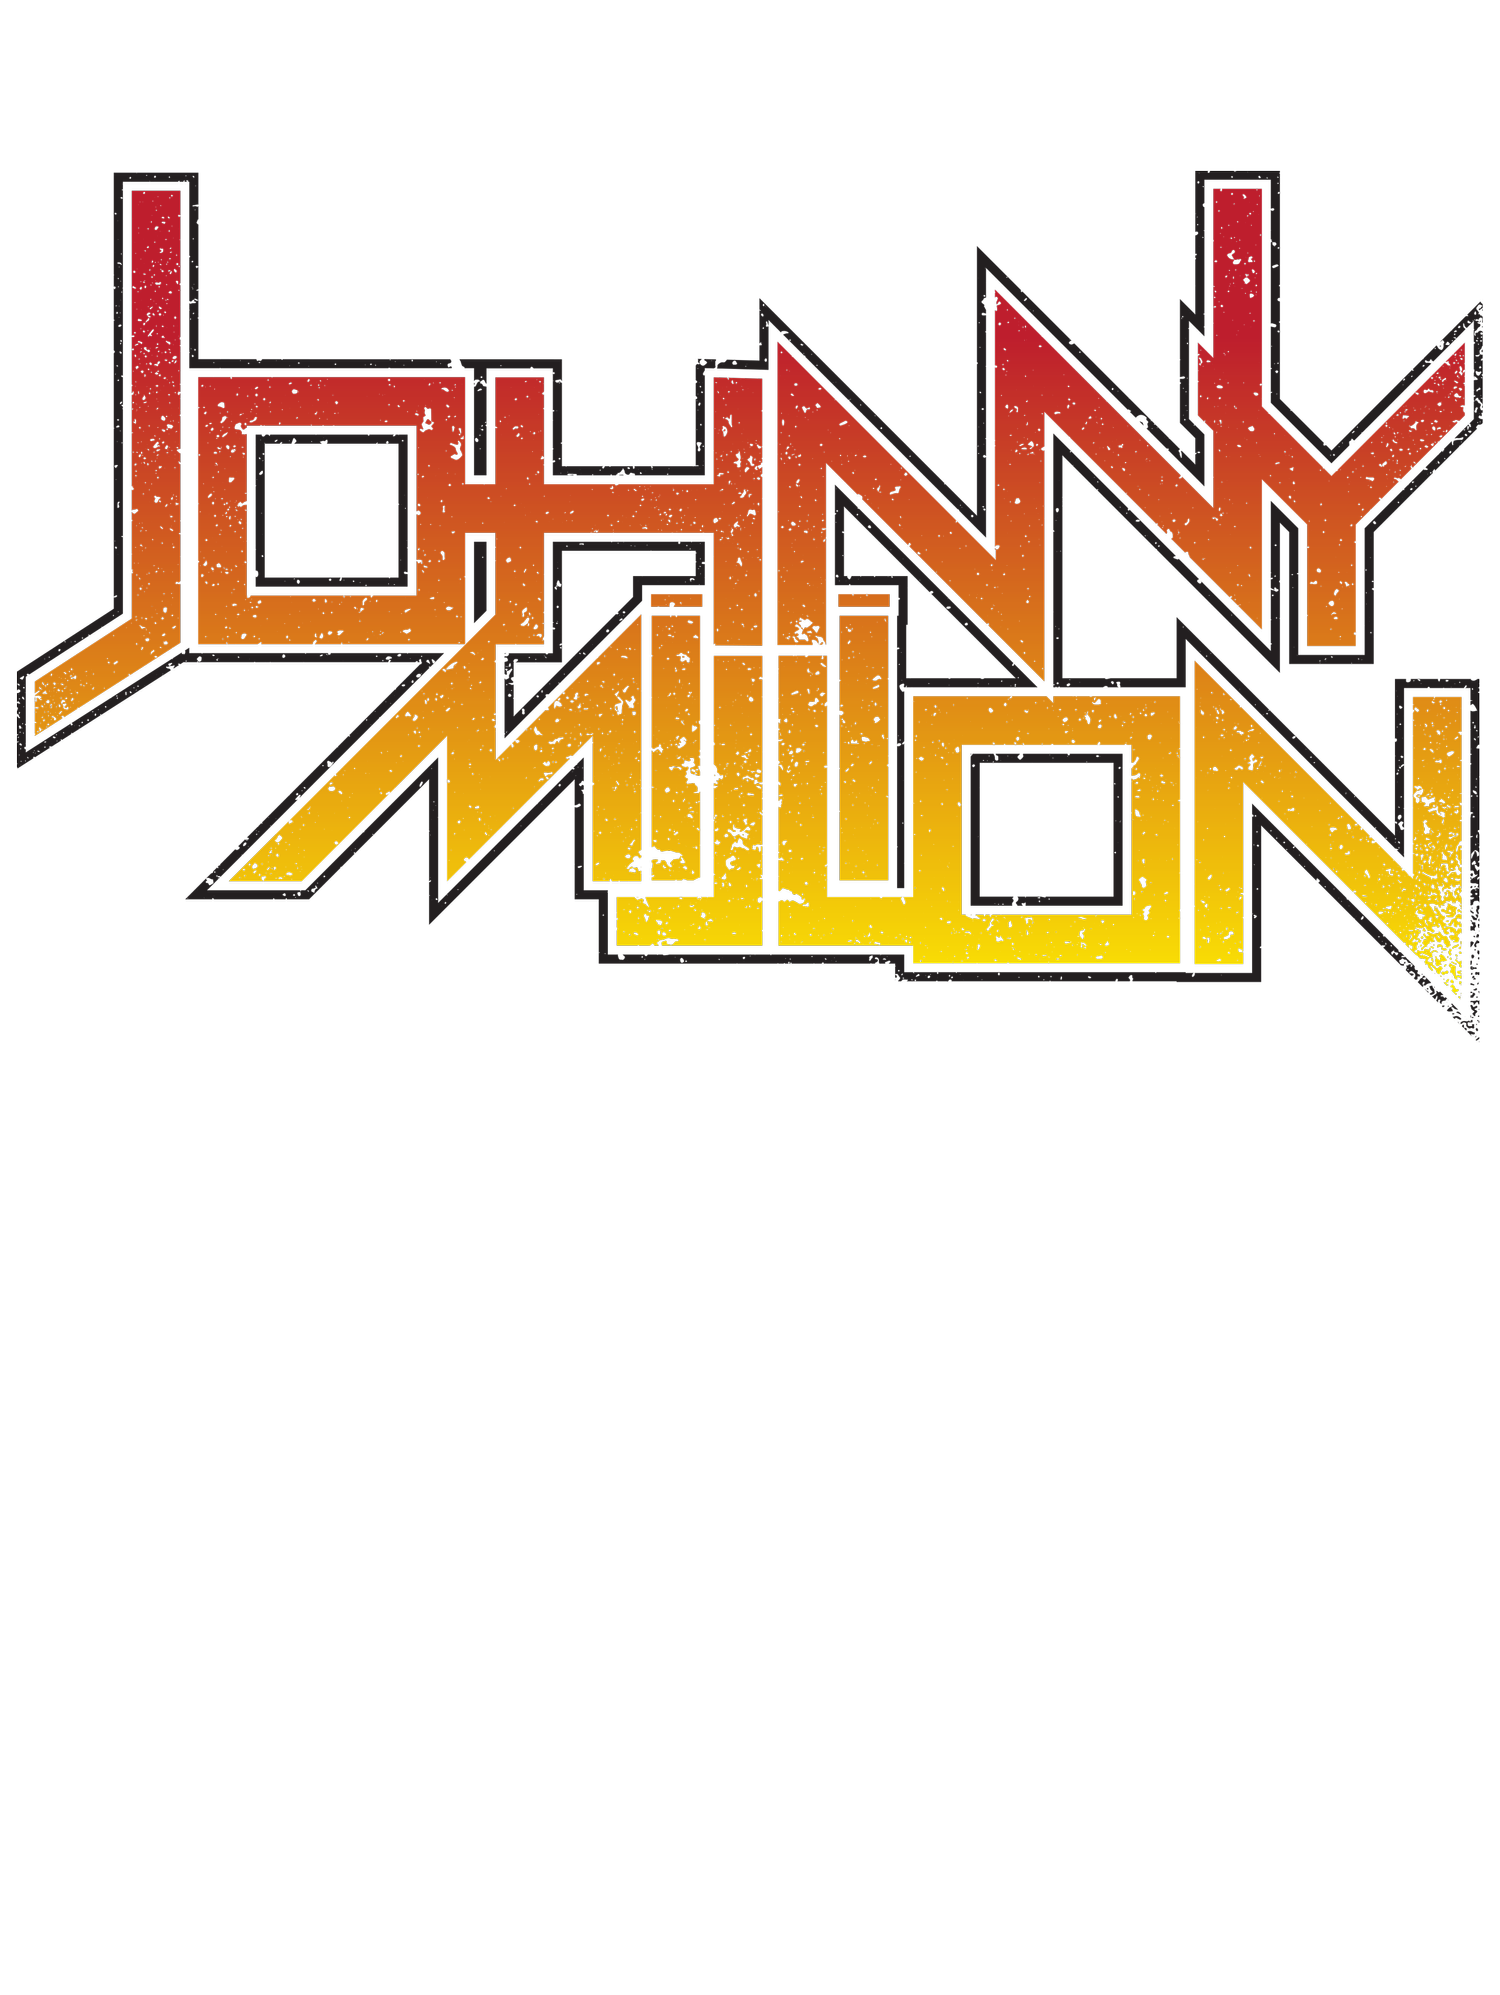 Johnny Million